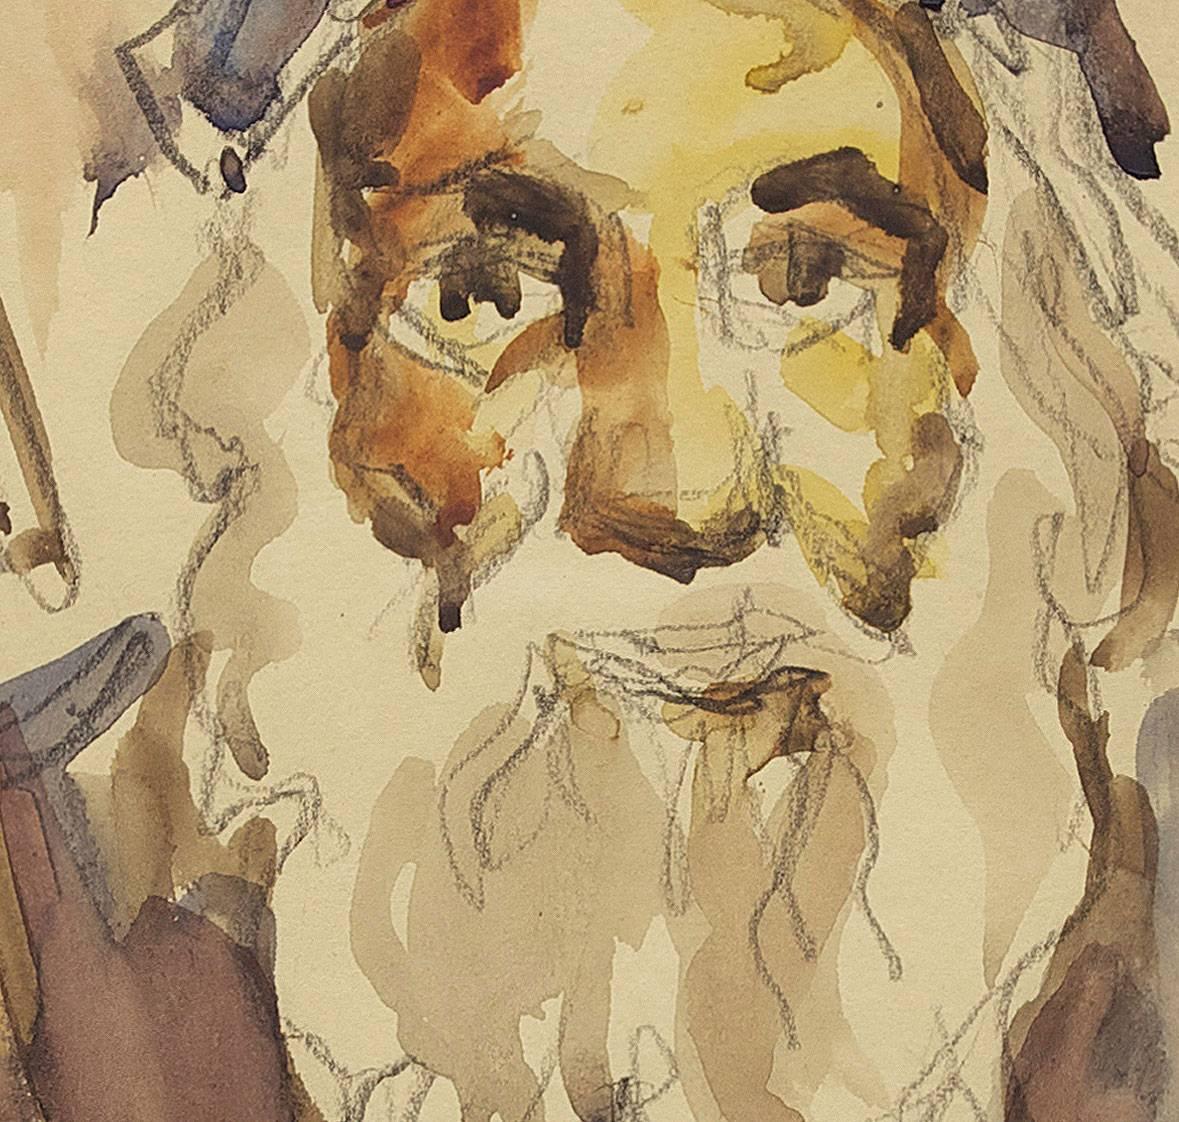 Old Rabbi Holding a Cane - Art by David Gilboa